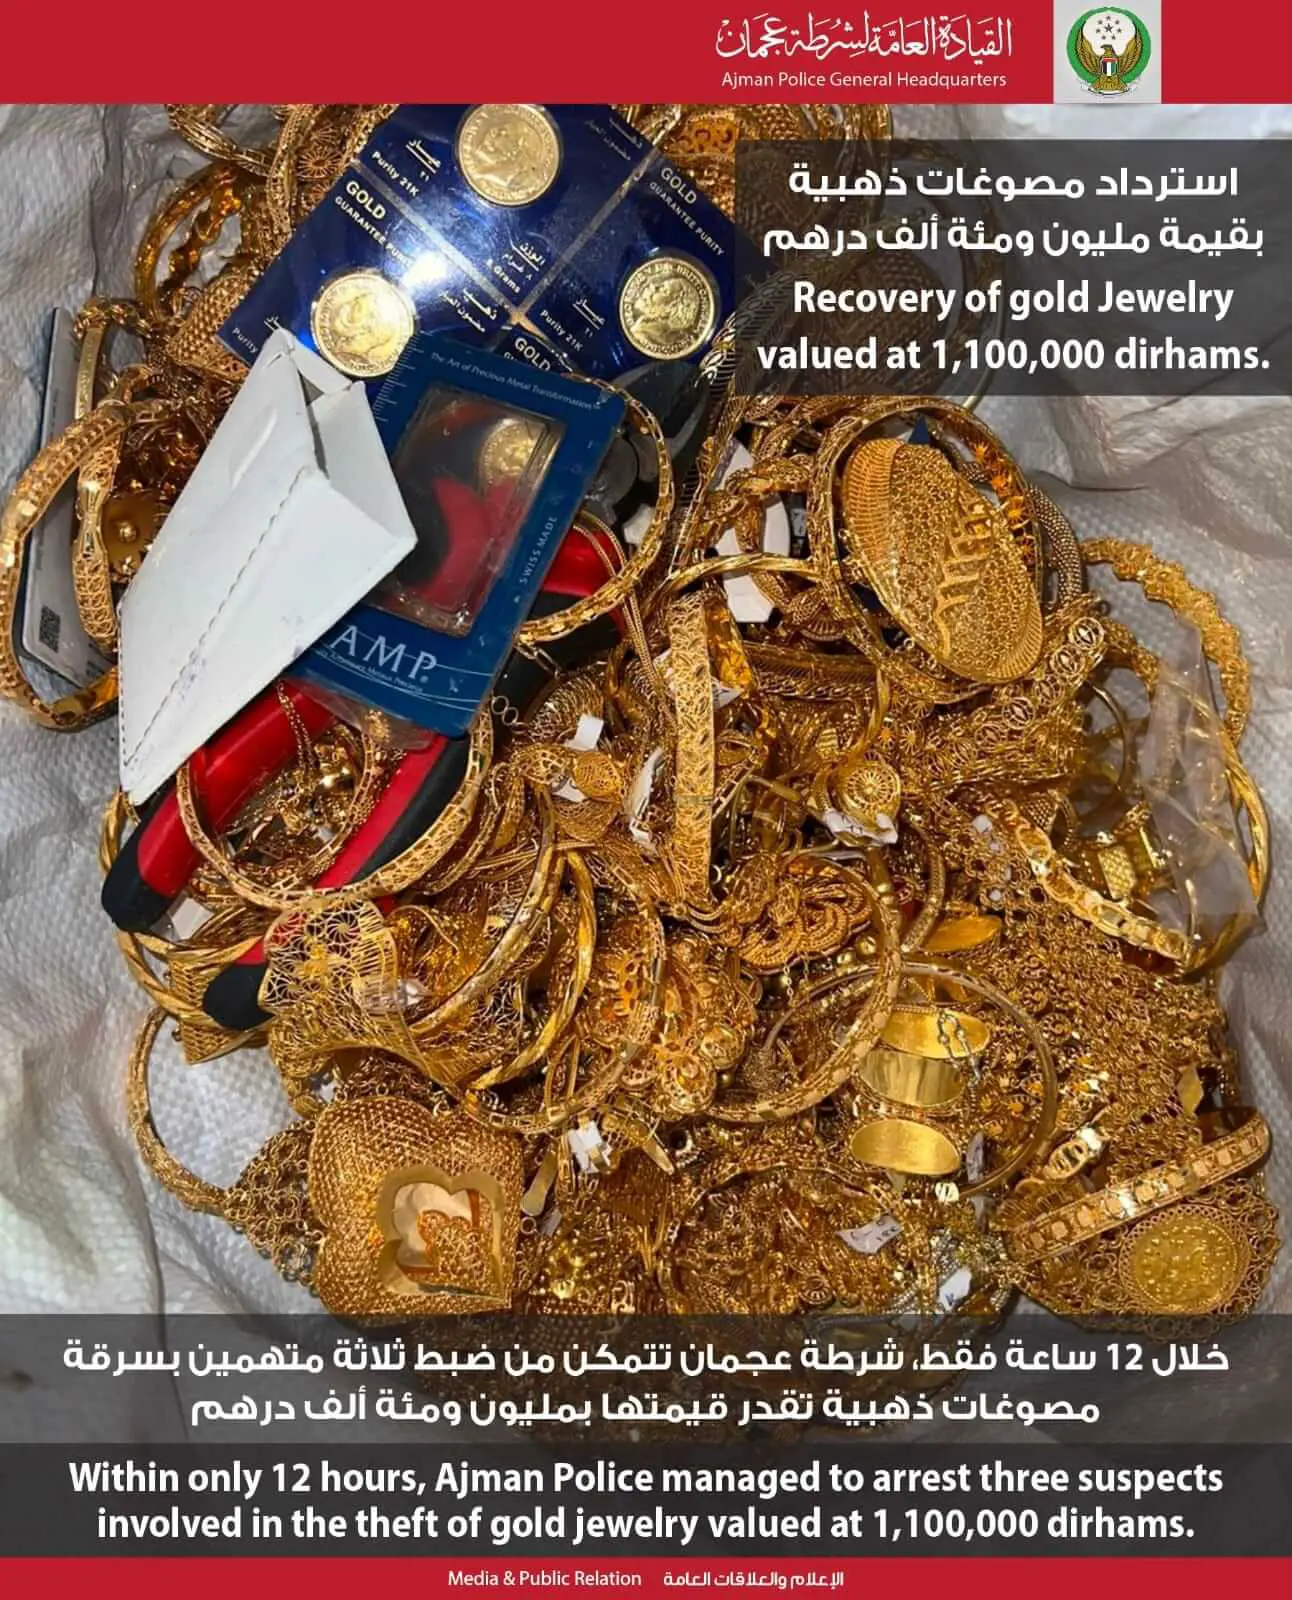 ajman police seize robbers gold worht 1.1 Million Dirhams